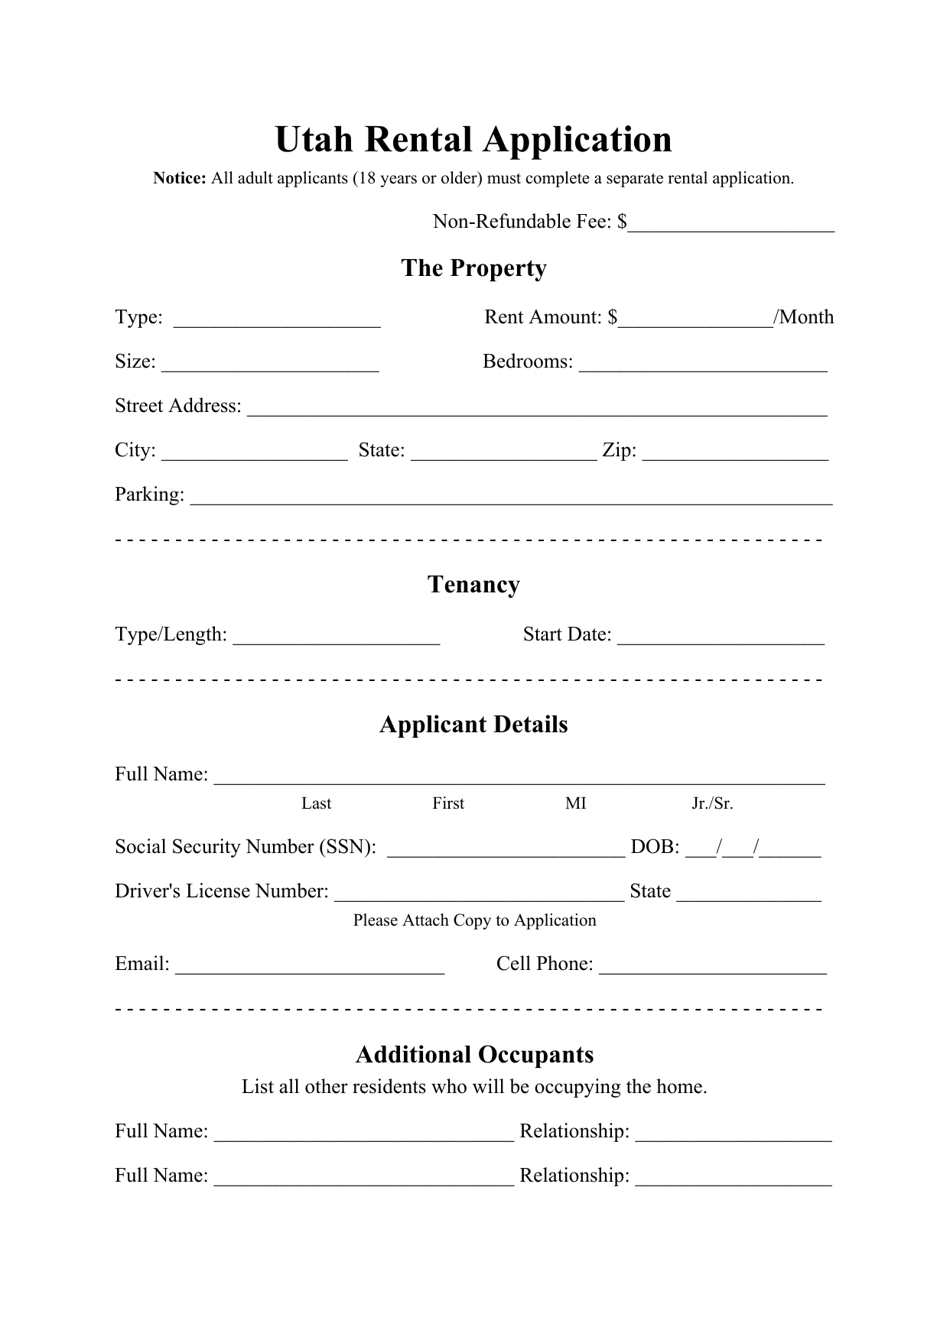 Rental Application Form - Utah, Page 1